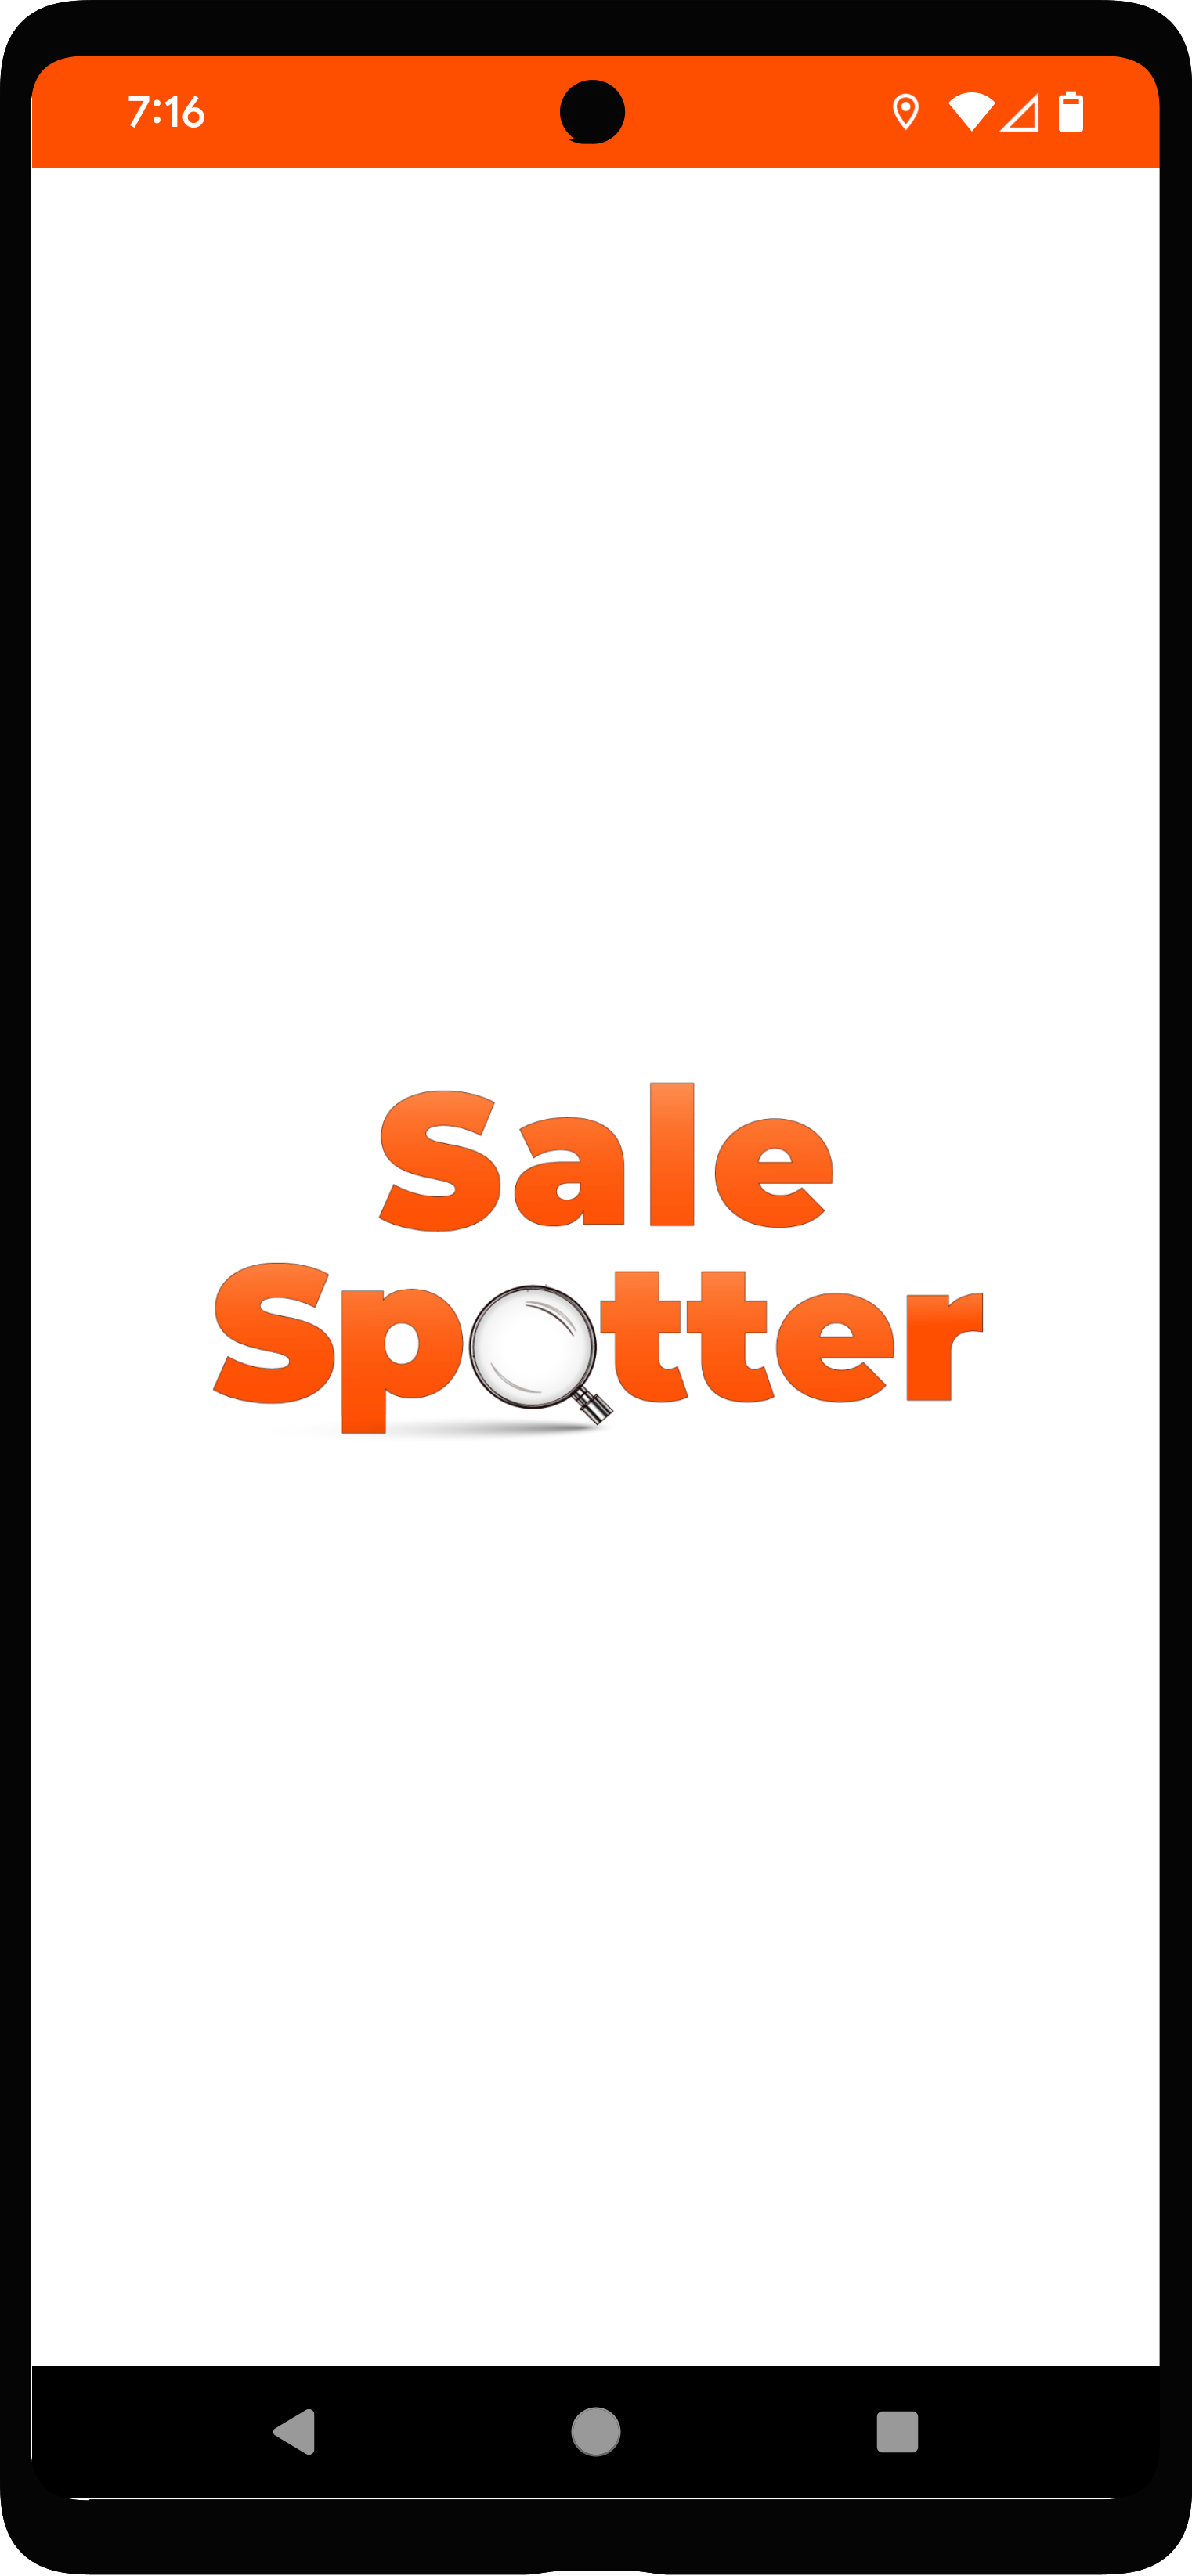 Phone displaying Sale-Spotter logo